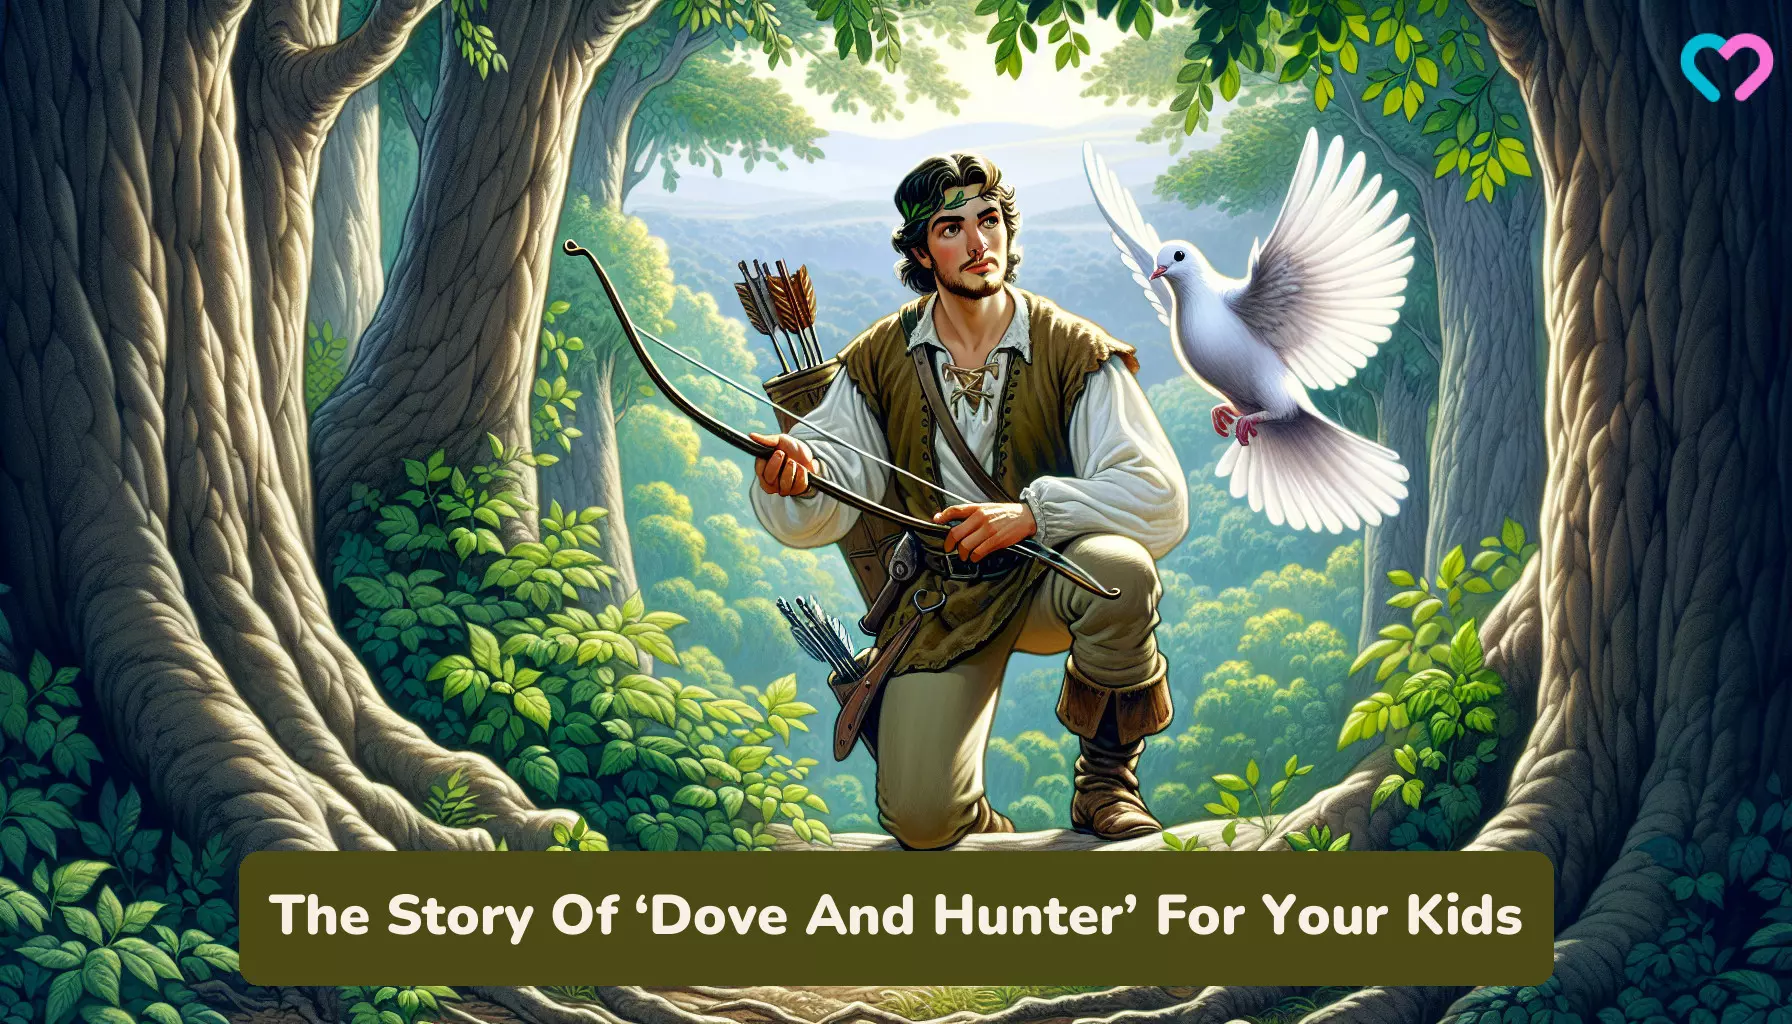 Dove And Hunter story for kids_illustration